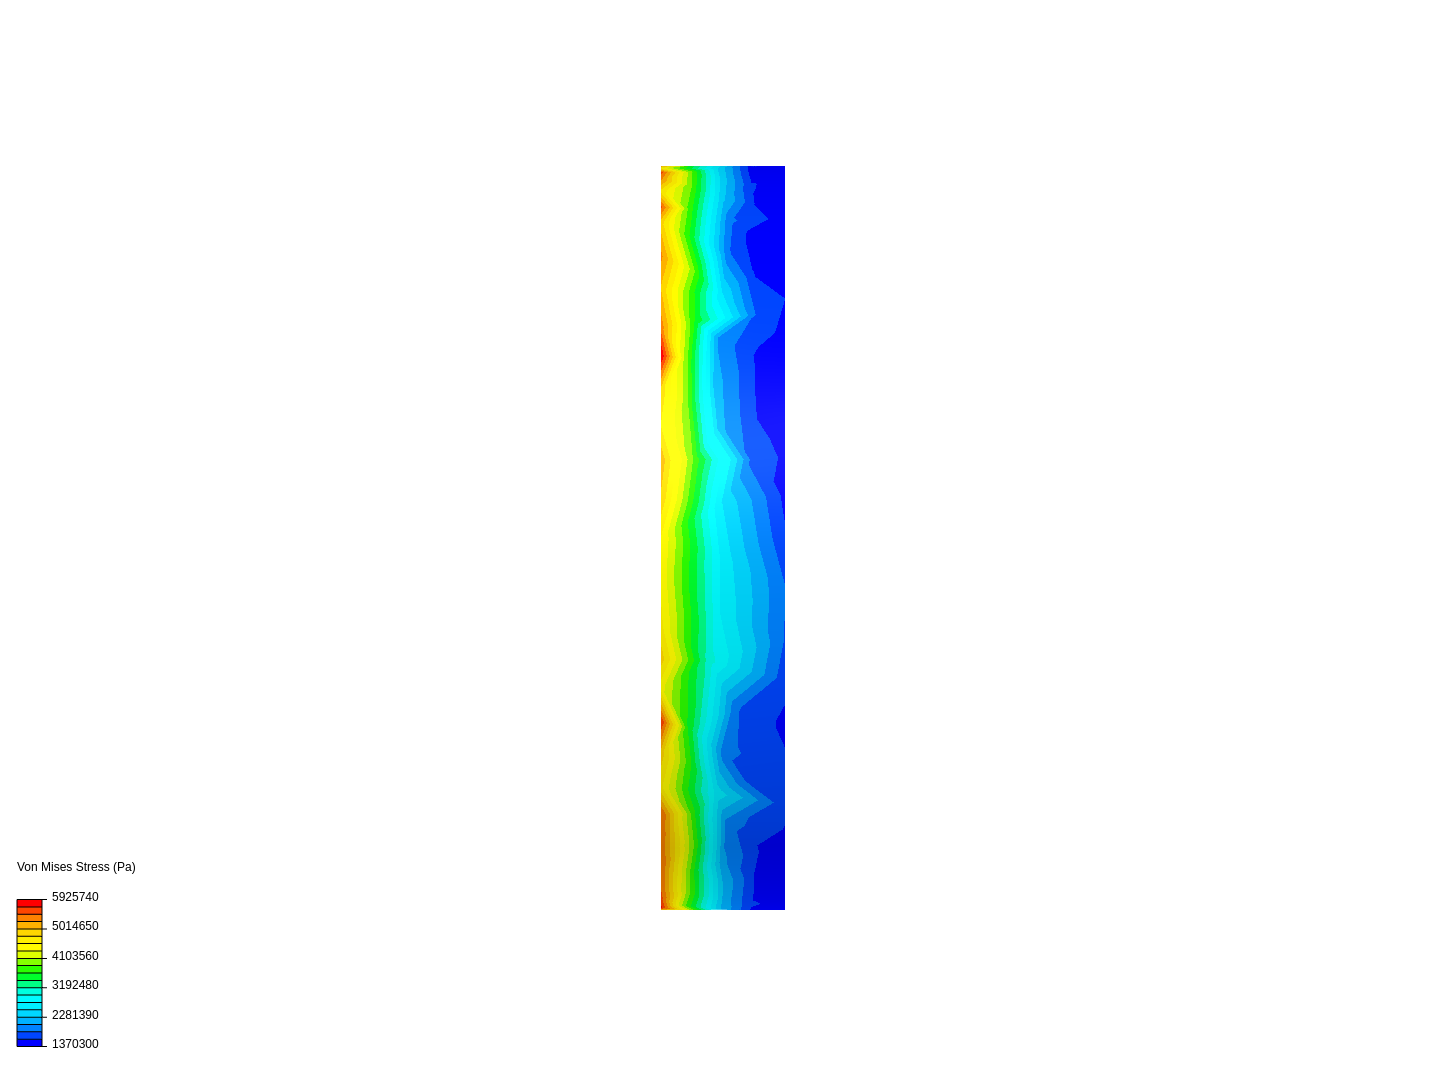 Rotating velocity analysis image